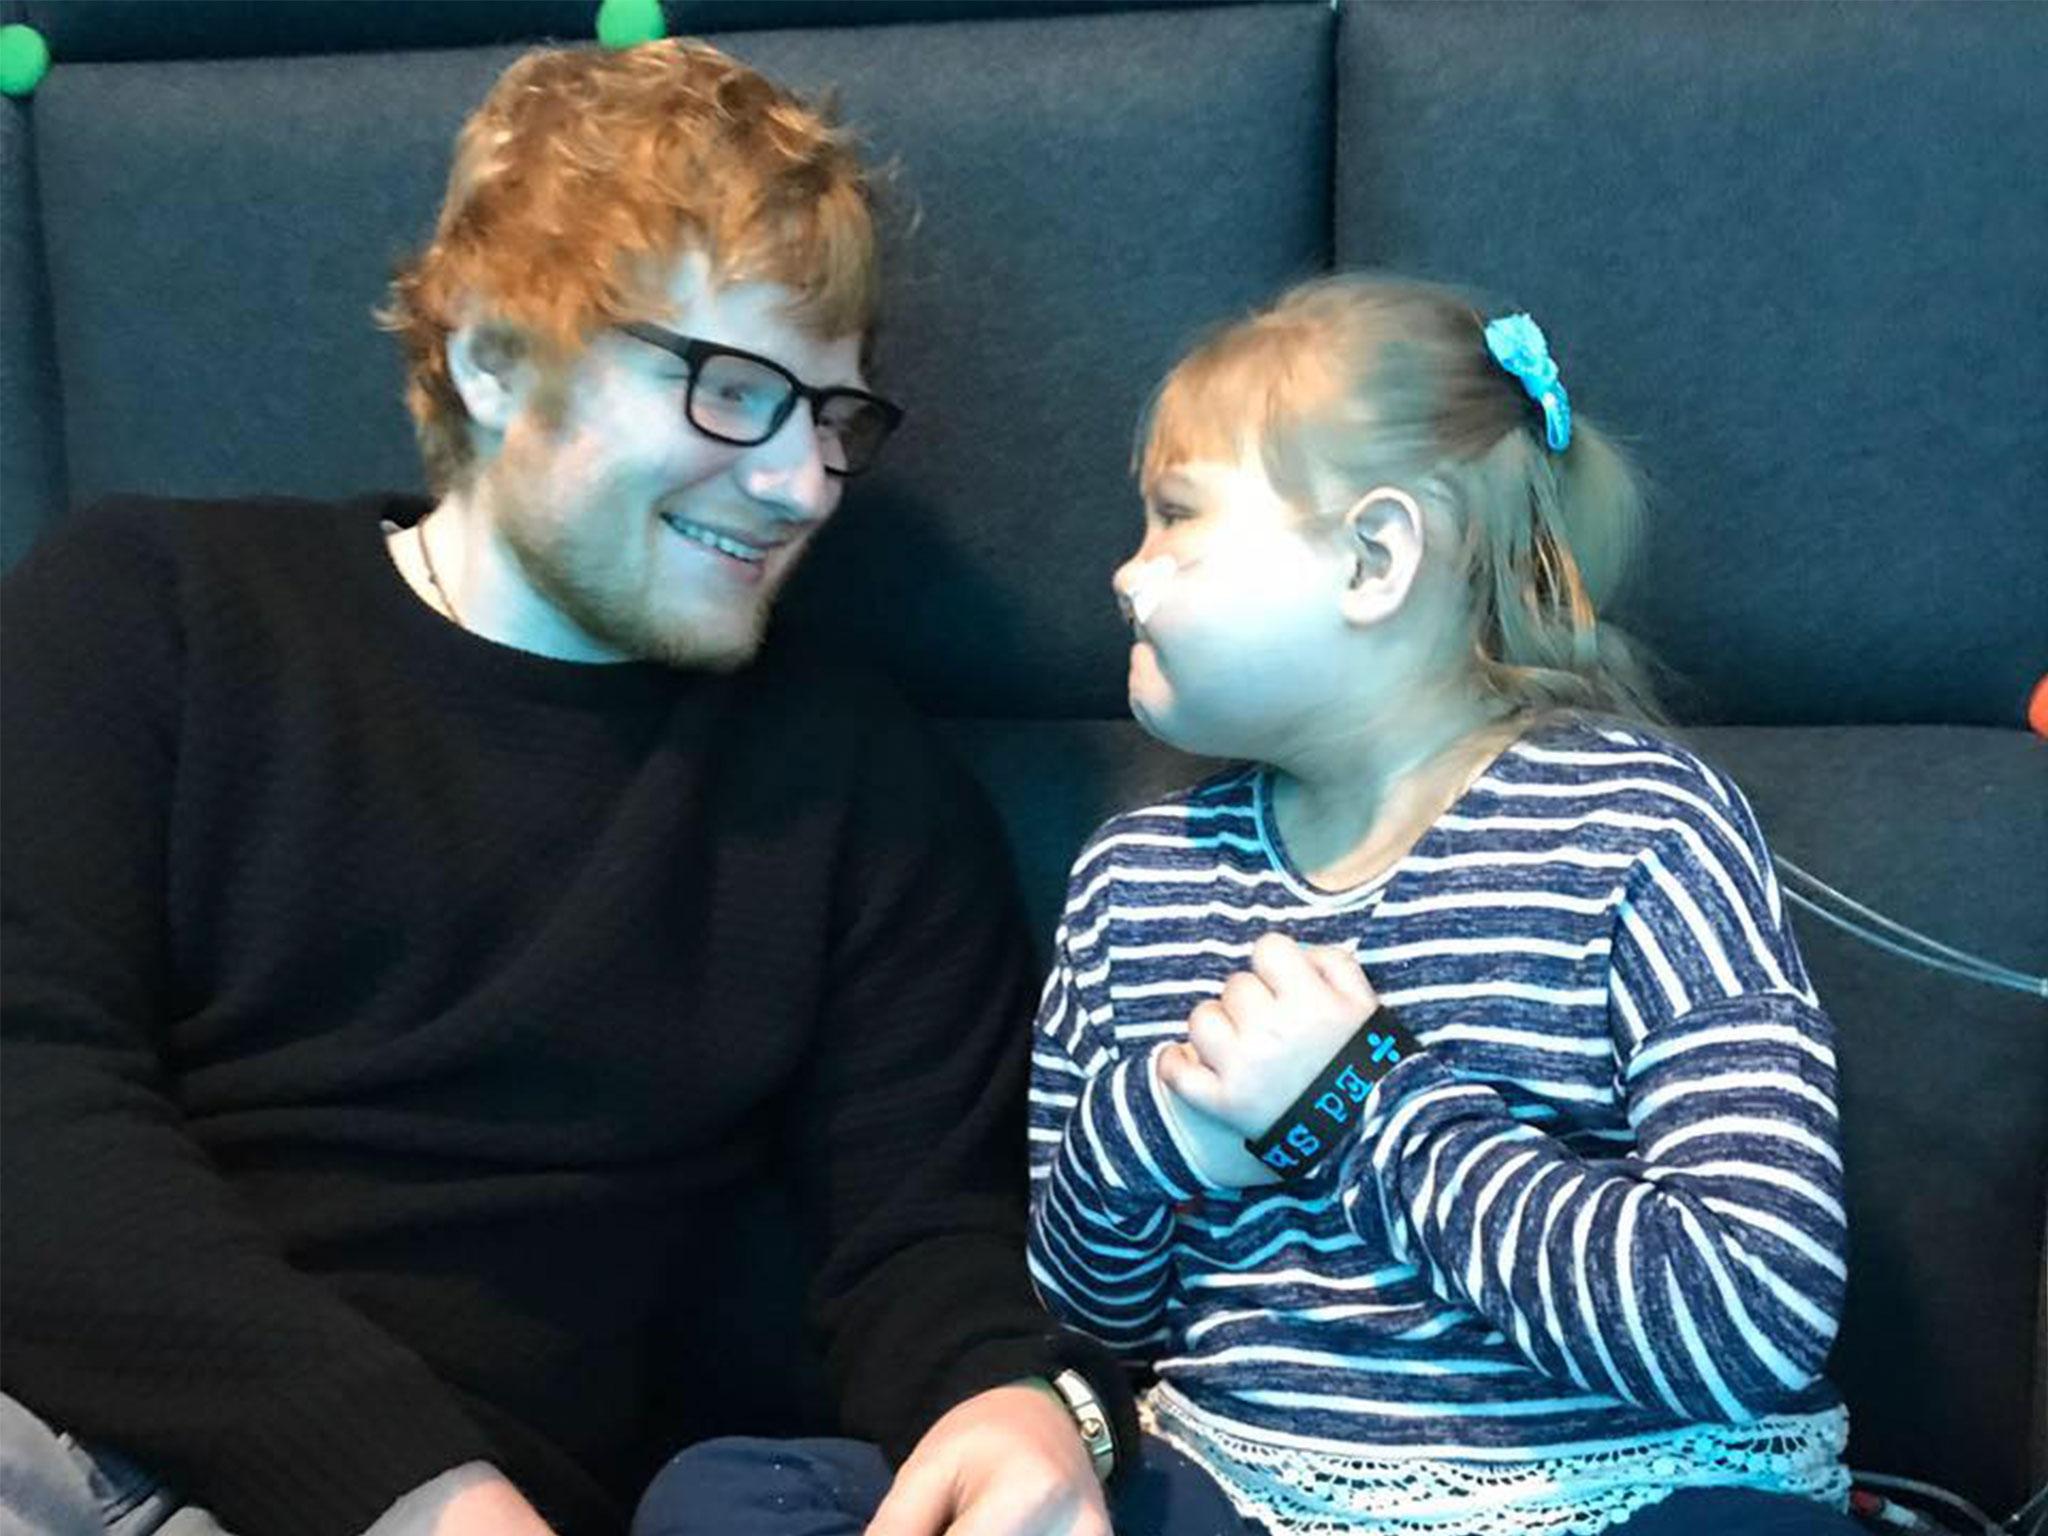 Ed Sheeran has formed a "close bond" with terminally-ill Melody Driscoll